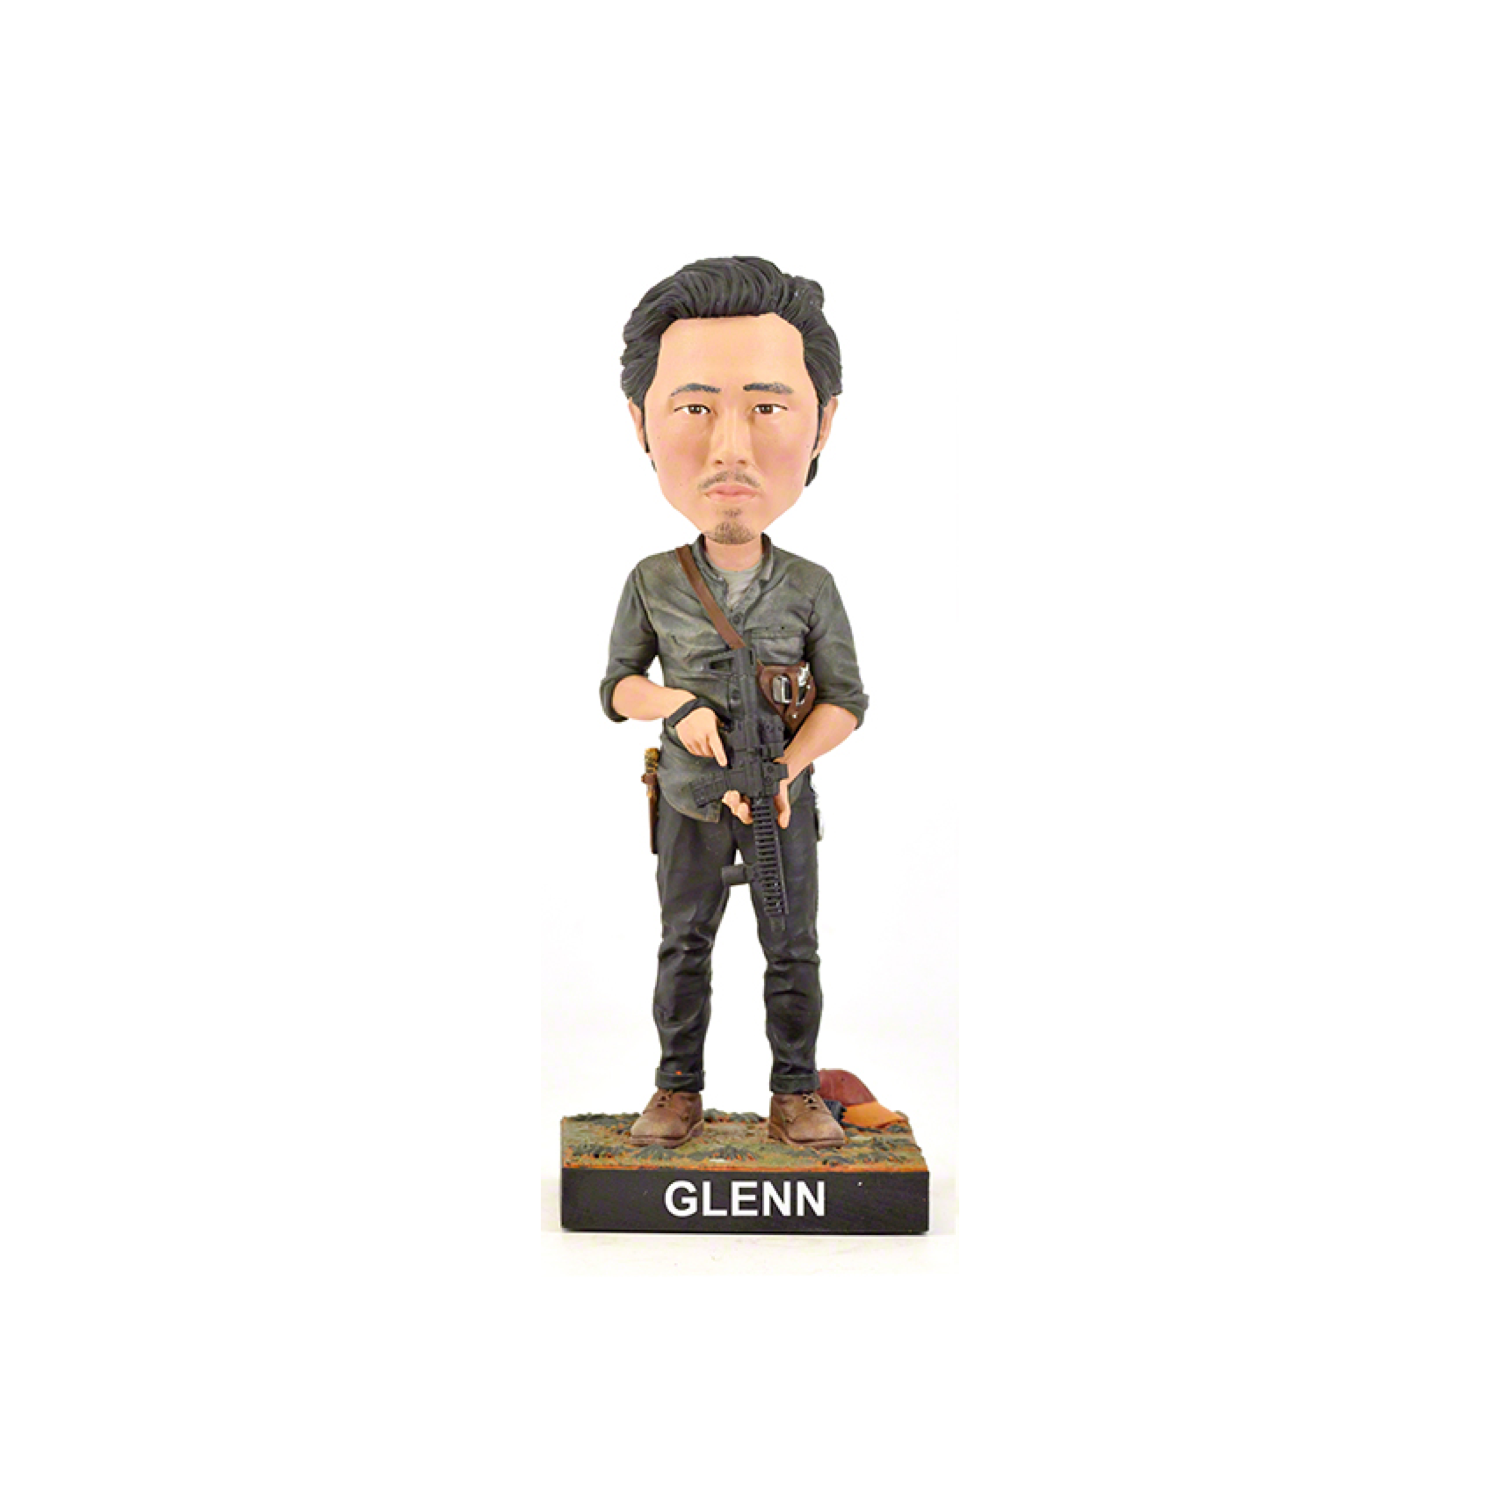 Glenn - The Walking Dead Bobblehead